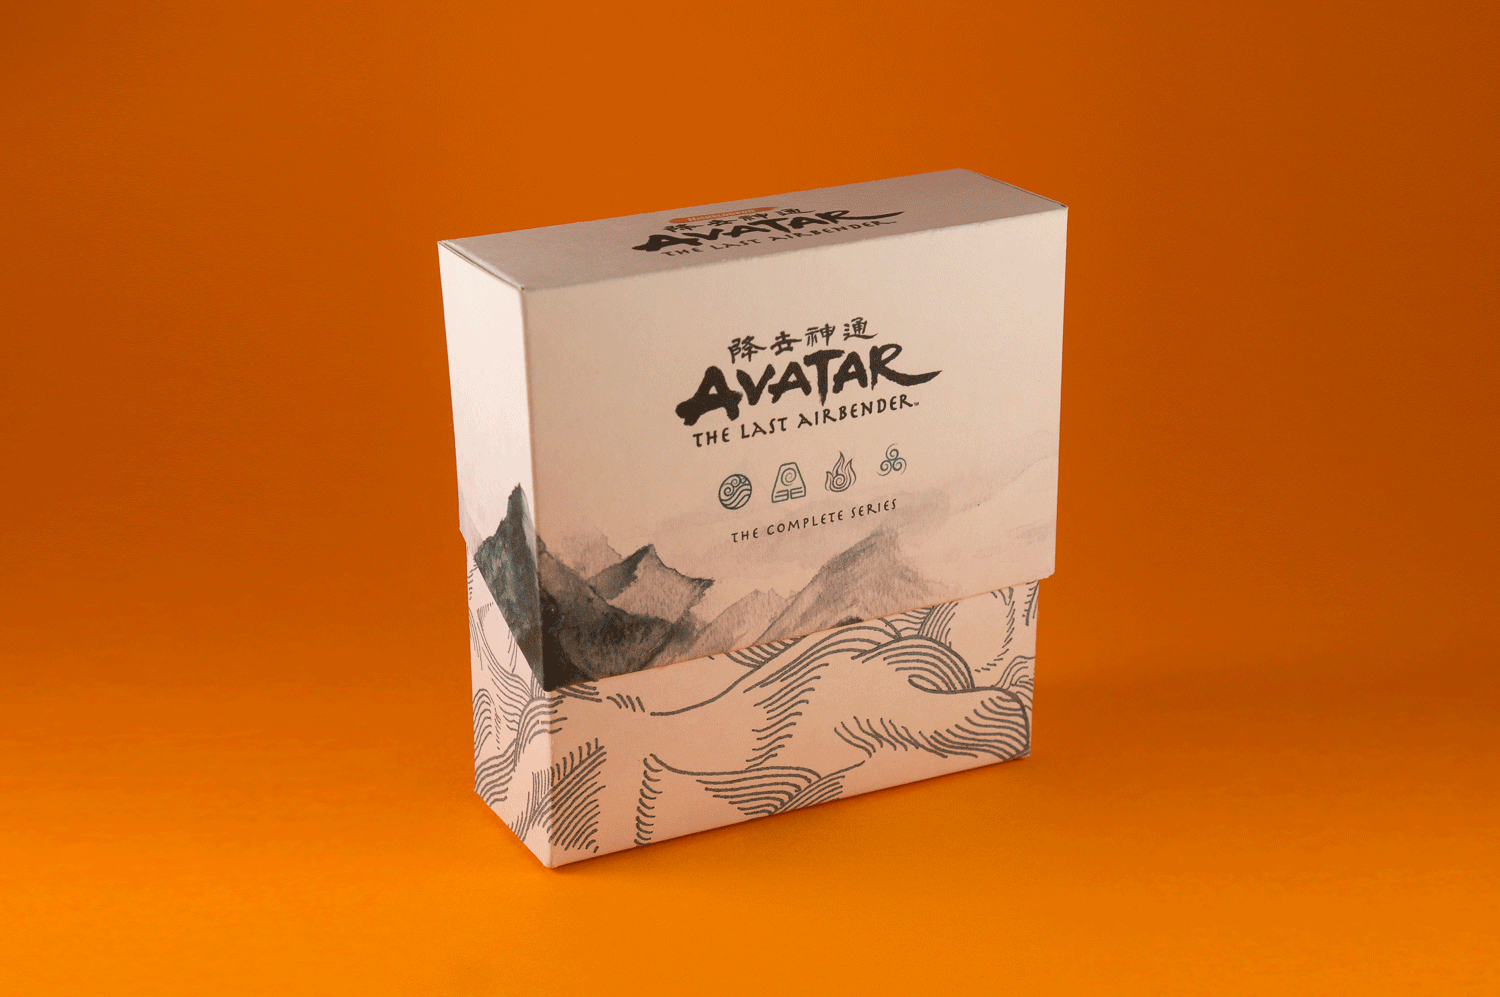 Avatar: The Last Air Bender